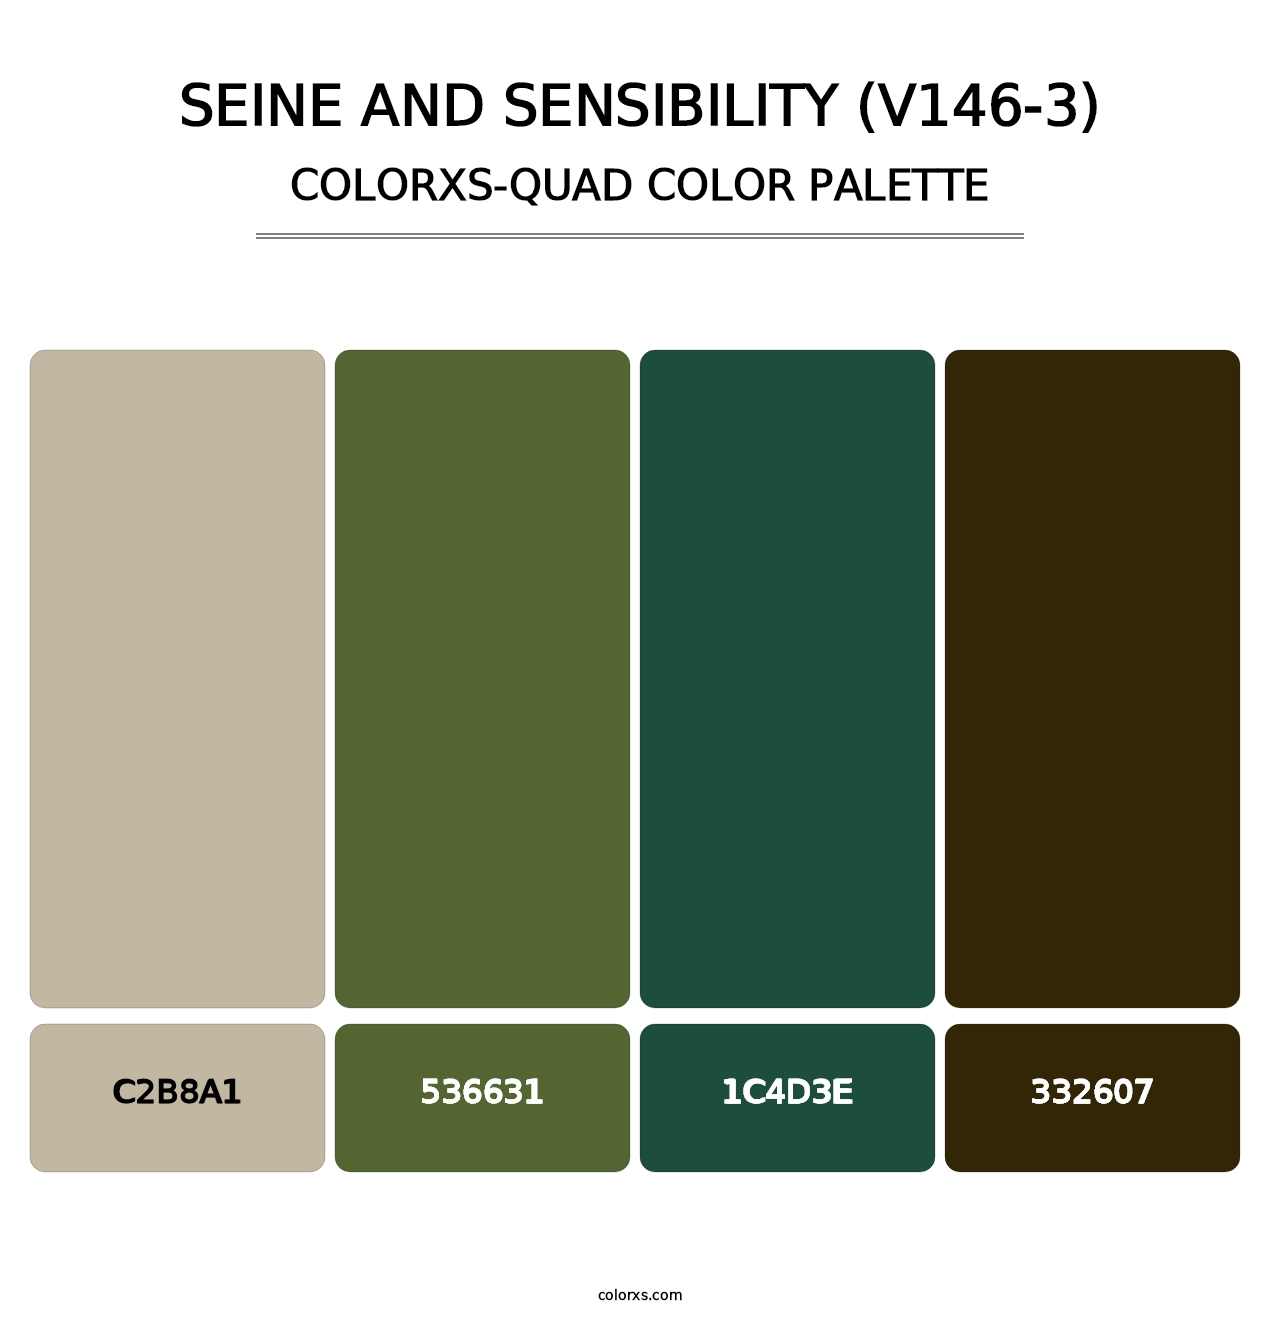 Seine and Sensibility (V146-3) - Colorxs Quad Palette